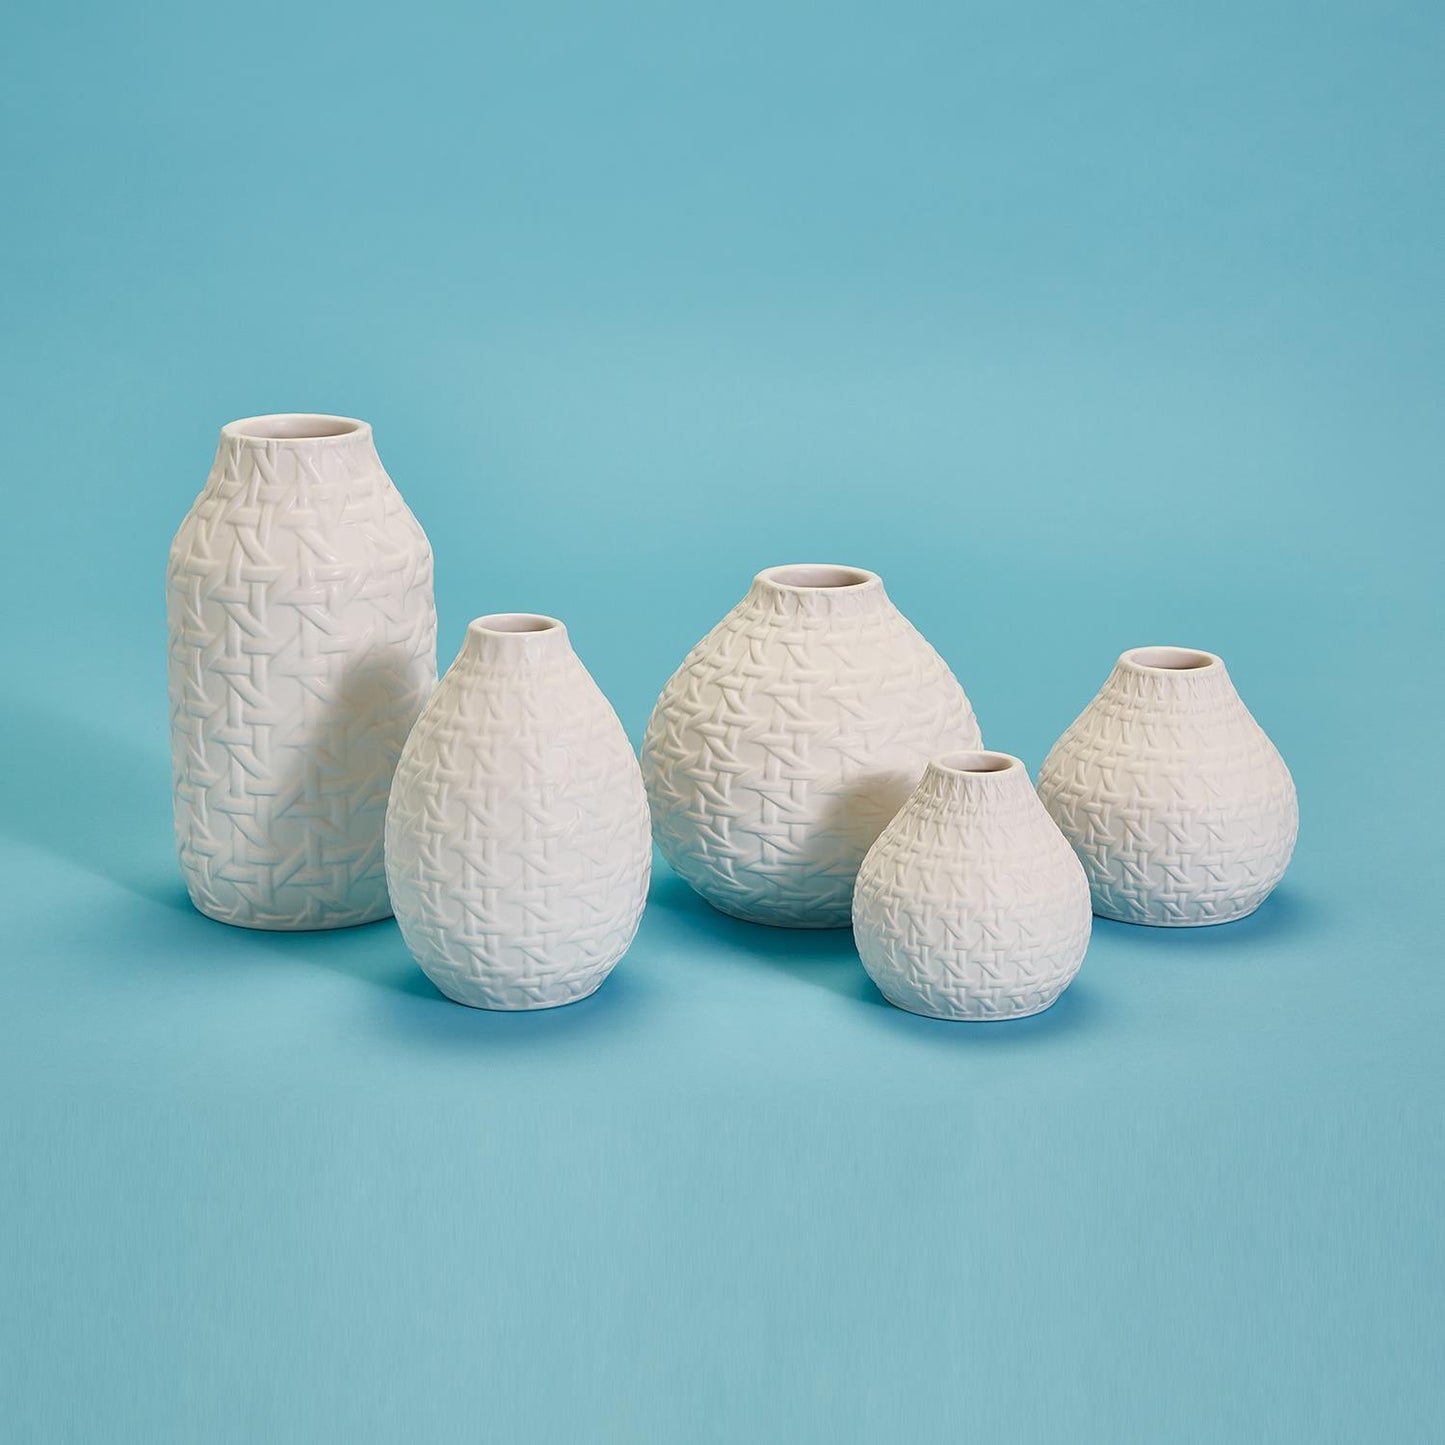 Two's Company set of 5 embossed cane webbing pattern white ceramic vases 